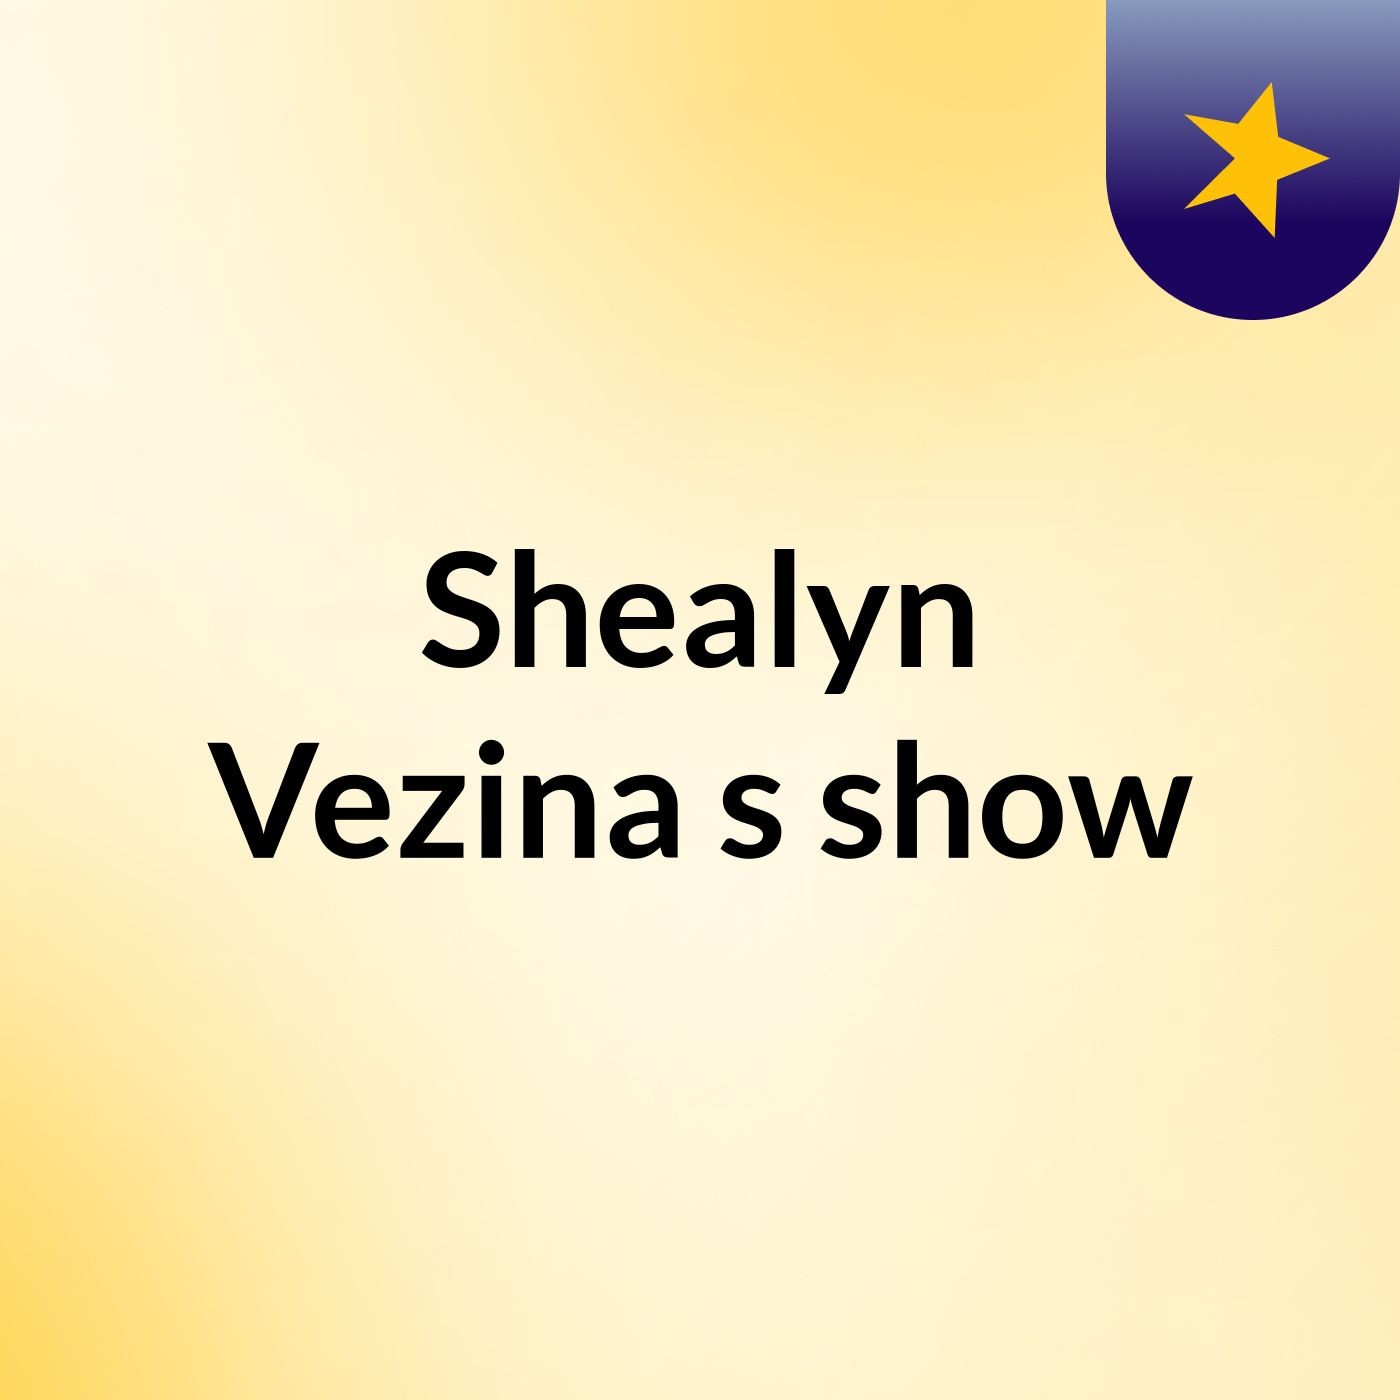 Shealyn Vezina's show